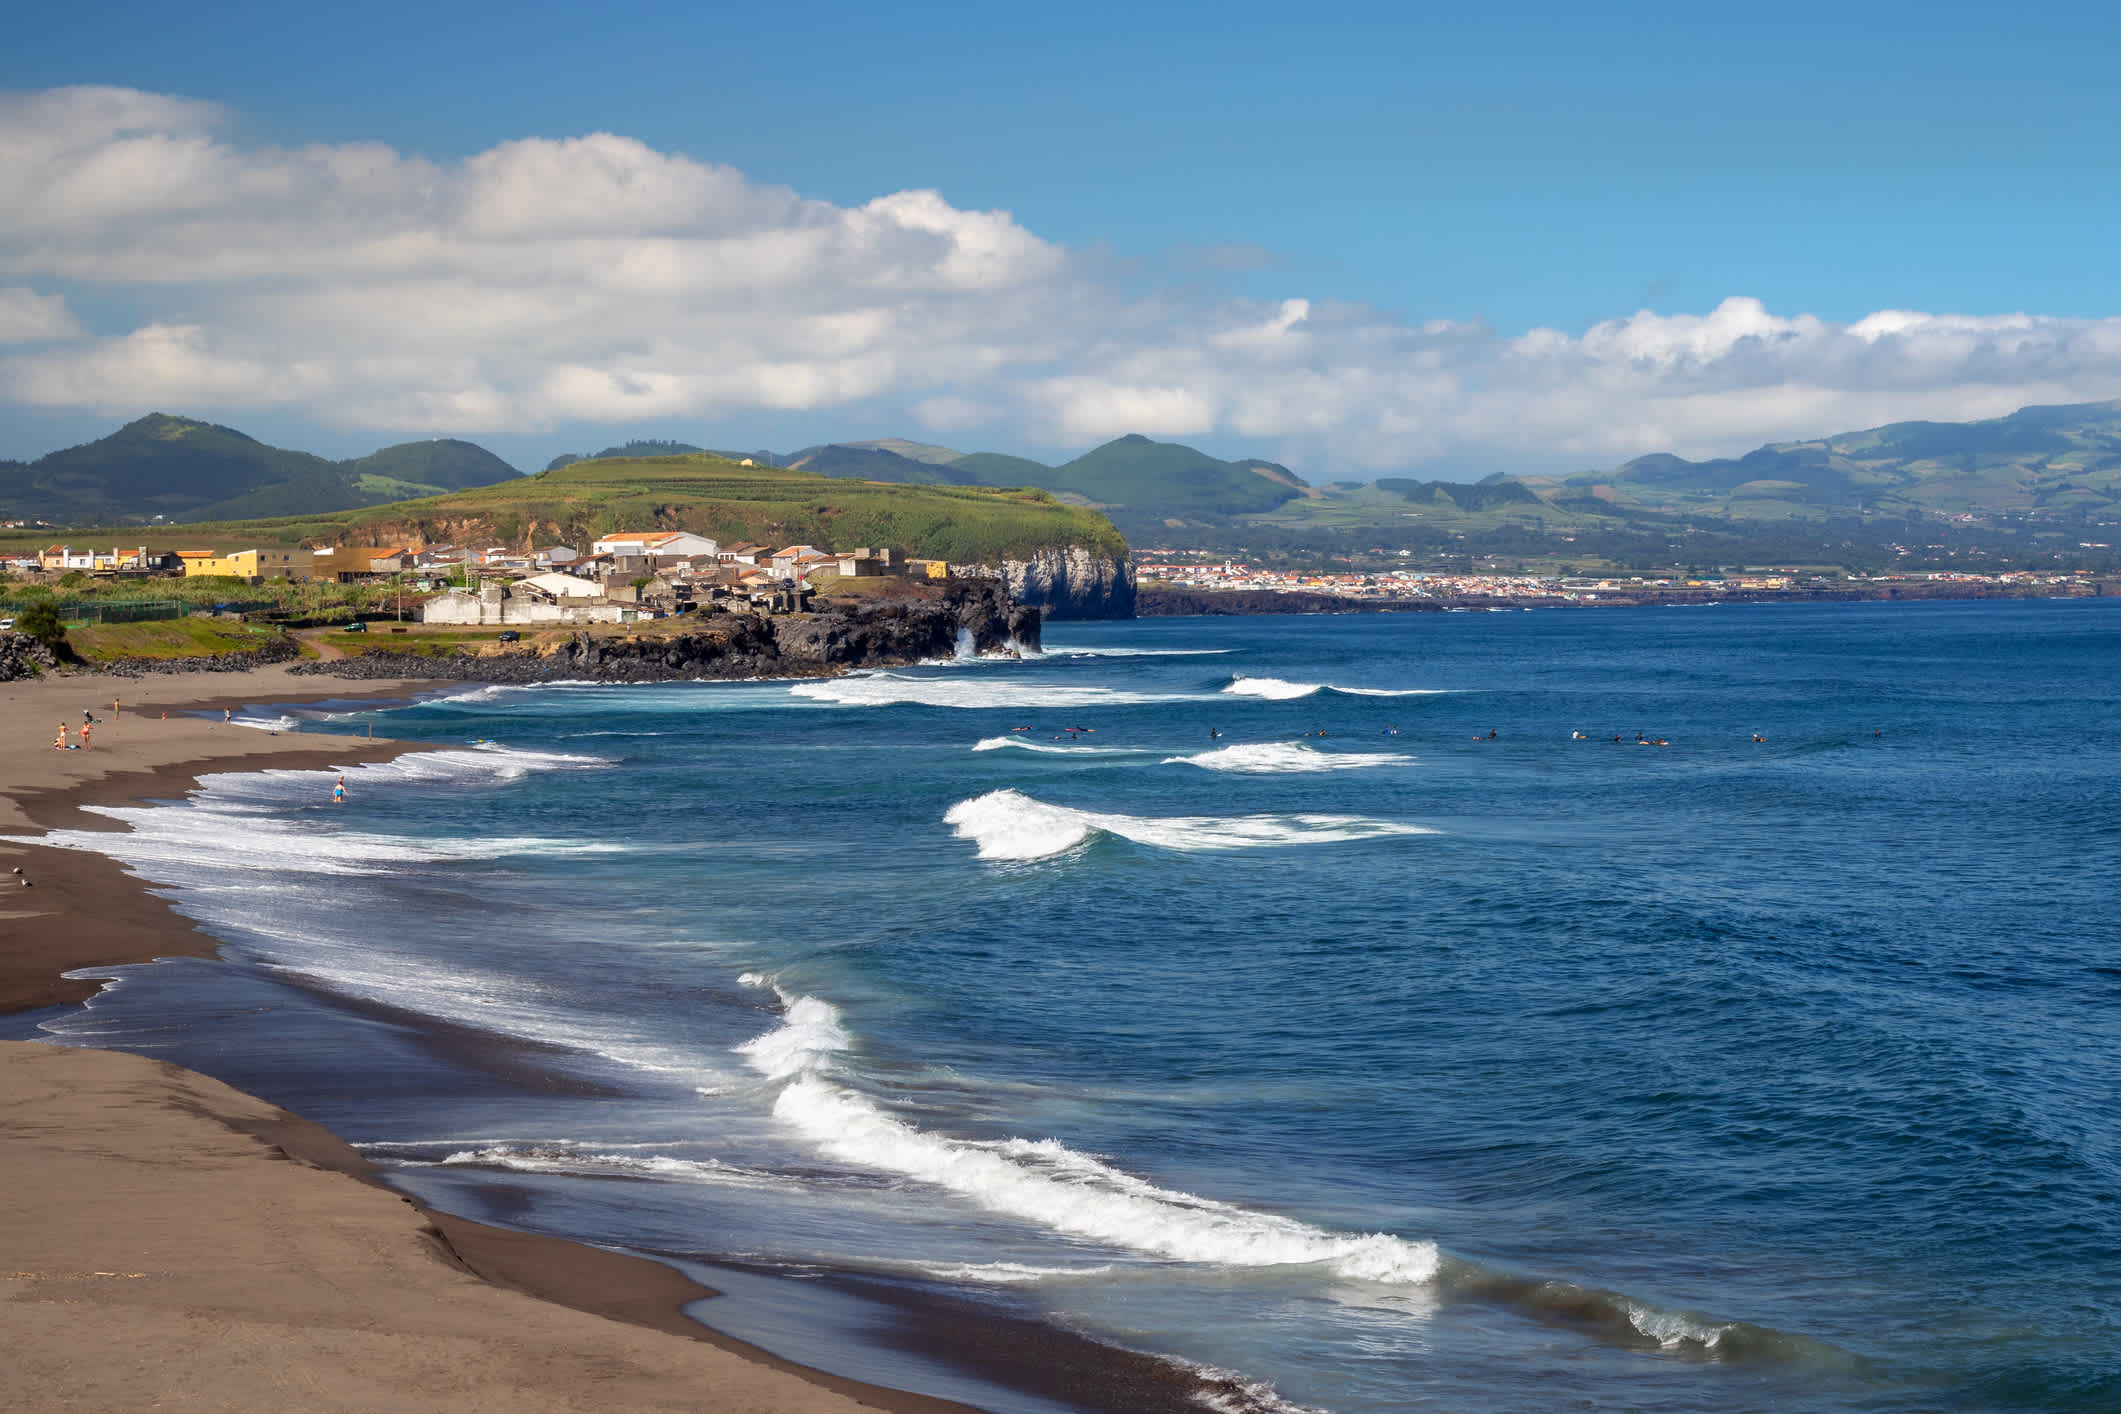 La vue sur la côte atlantique et la ville de Ribeira Grande, île de Sao Miguel, Açores, Portugal

